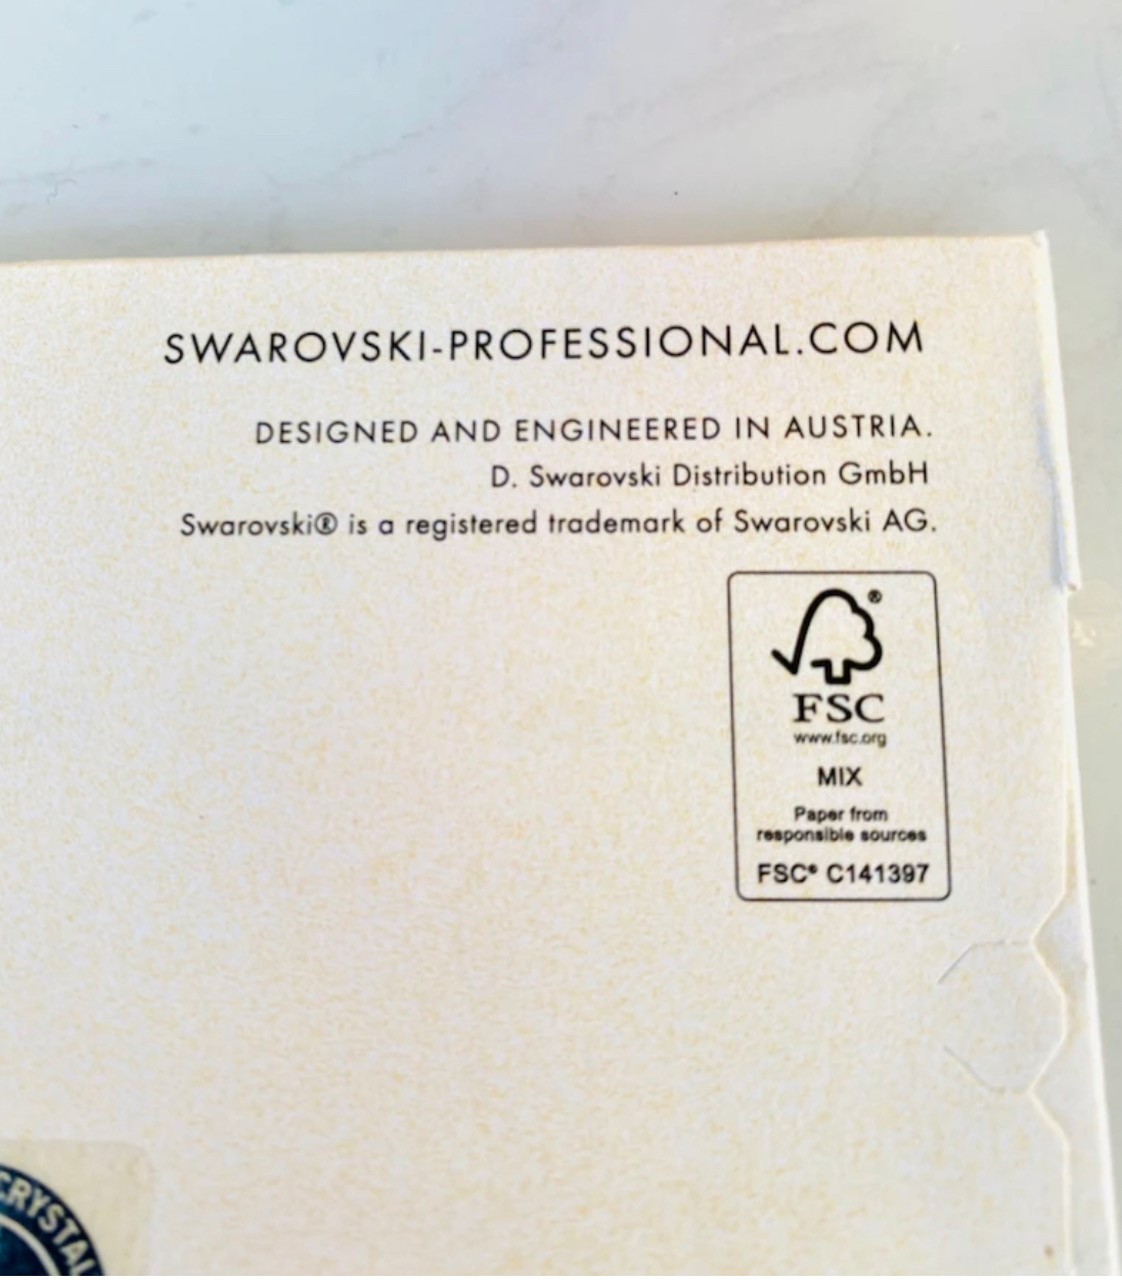 30pcs Tooth Gems Swarovski® Crystals Lead Free Non Hotfix Designs Foiled  Ss8 Rhinestones Flatbacks -  Australia